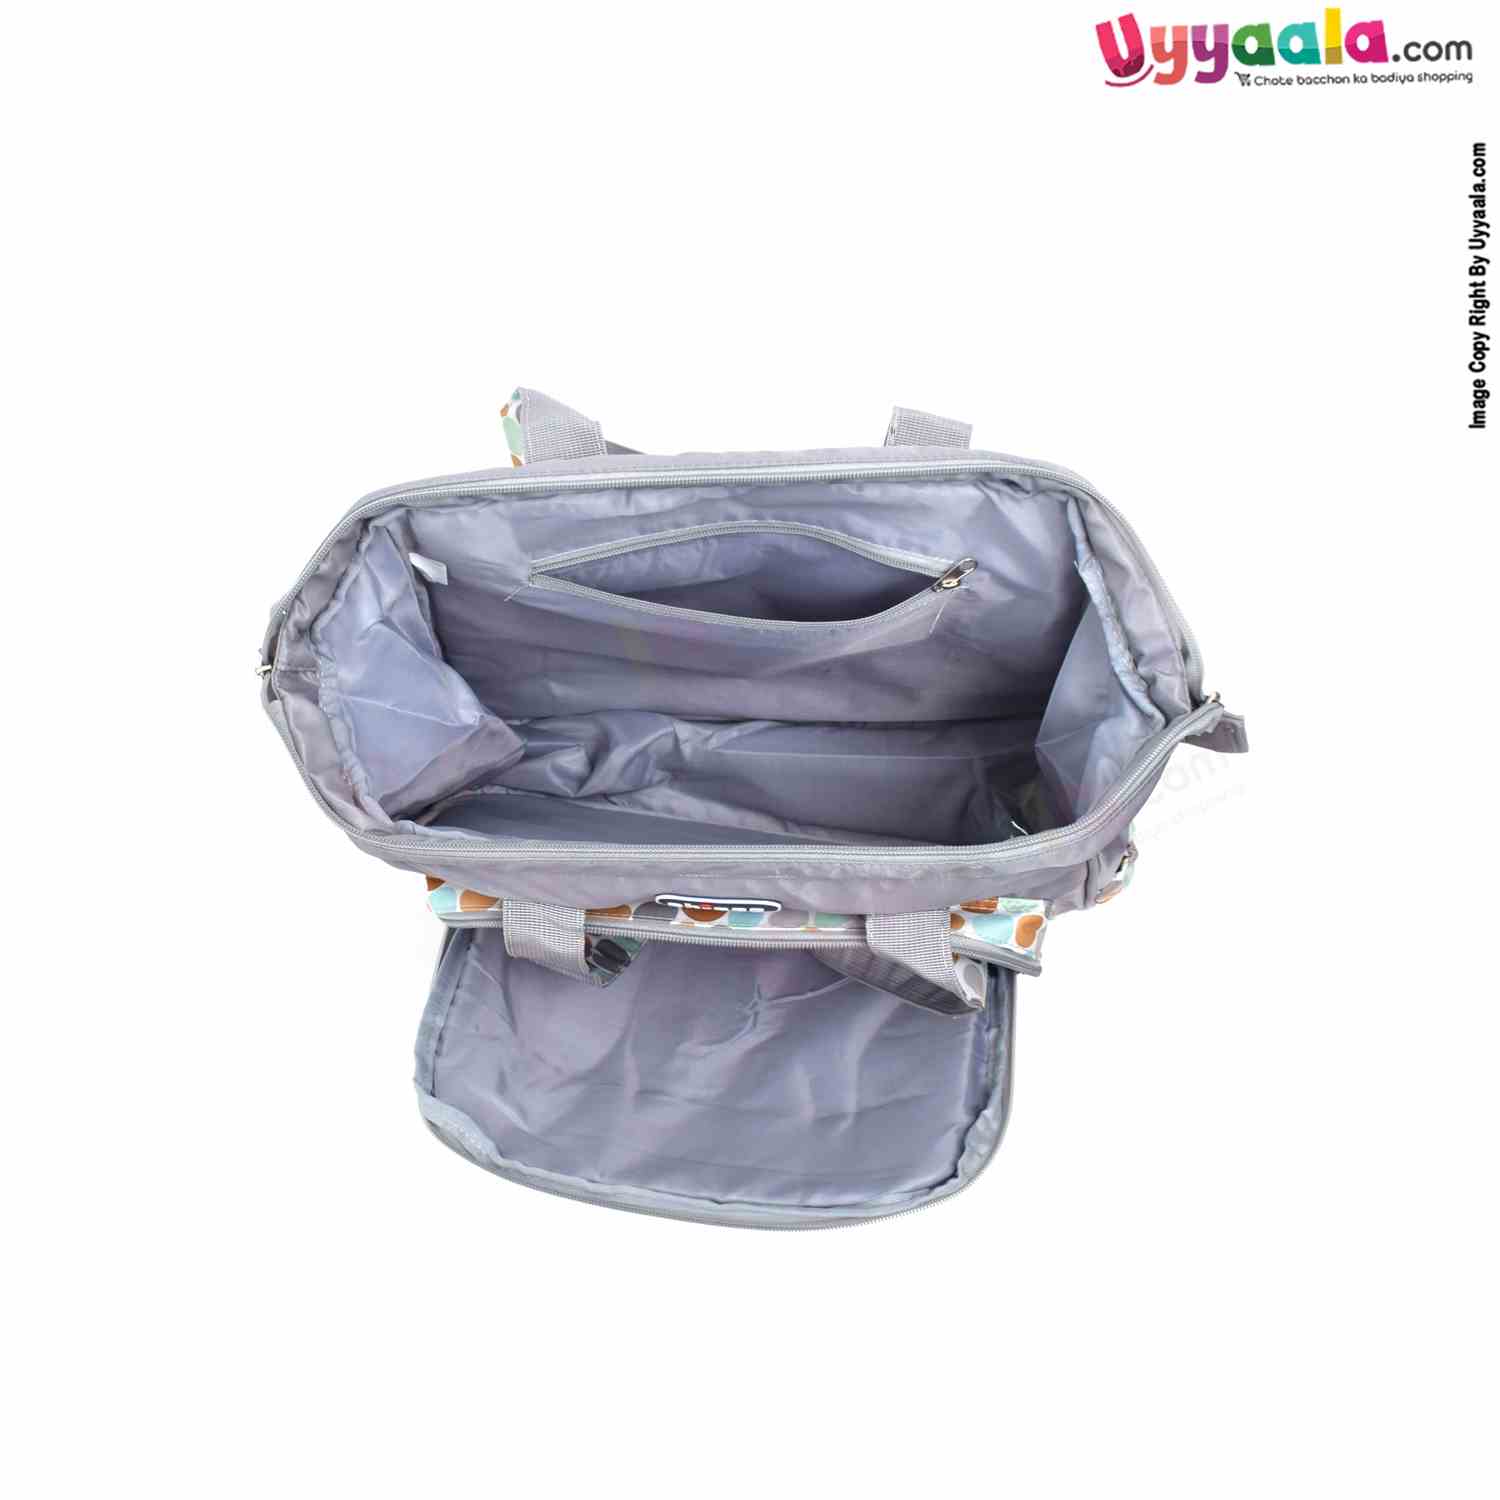 Premium Quality Multipurpose Mother Bag(Diaper Bag) with side Bottle Pockets & Bottle Holders, Dot Print, Size(42*36cm) - Grey